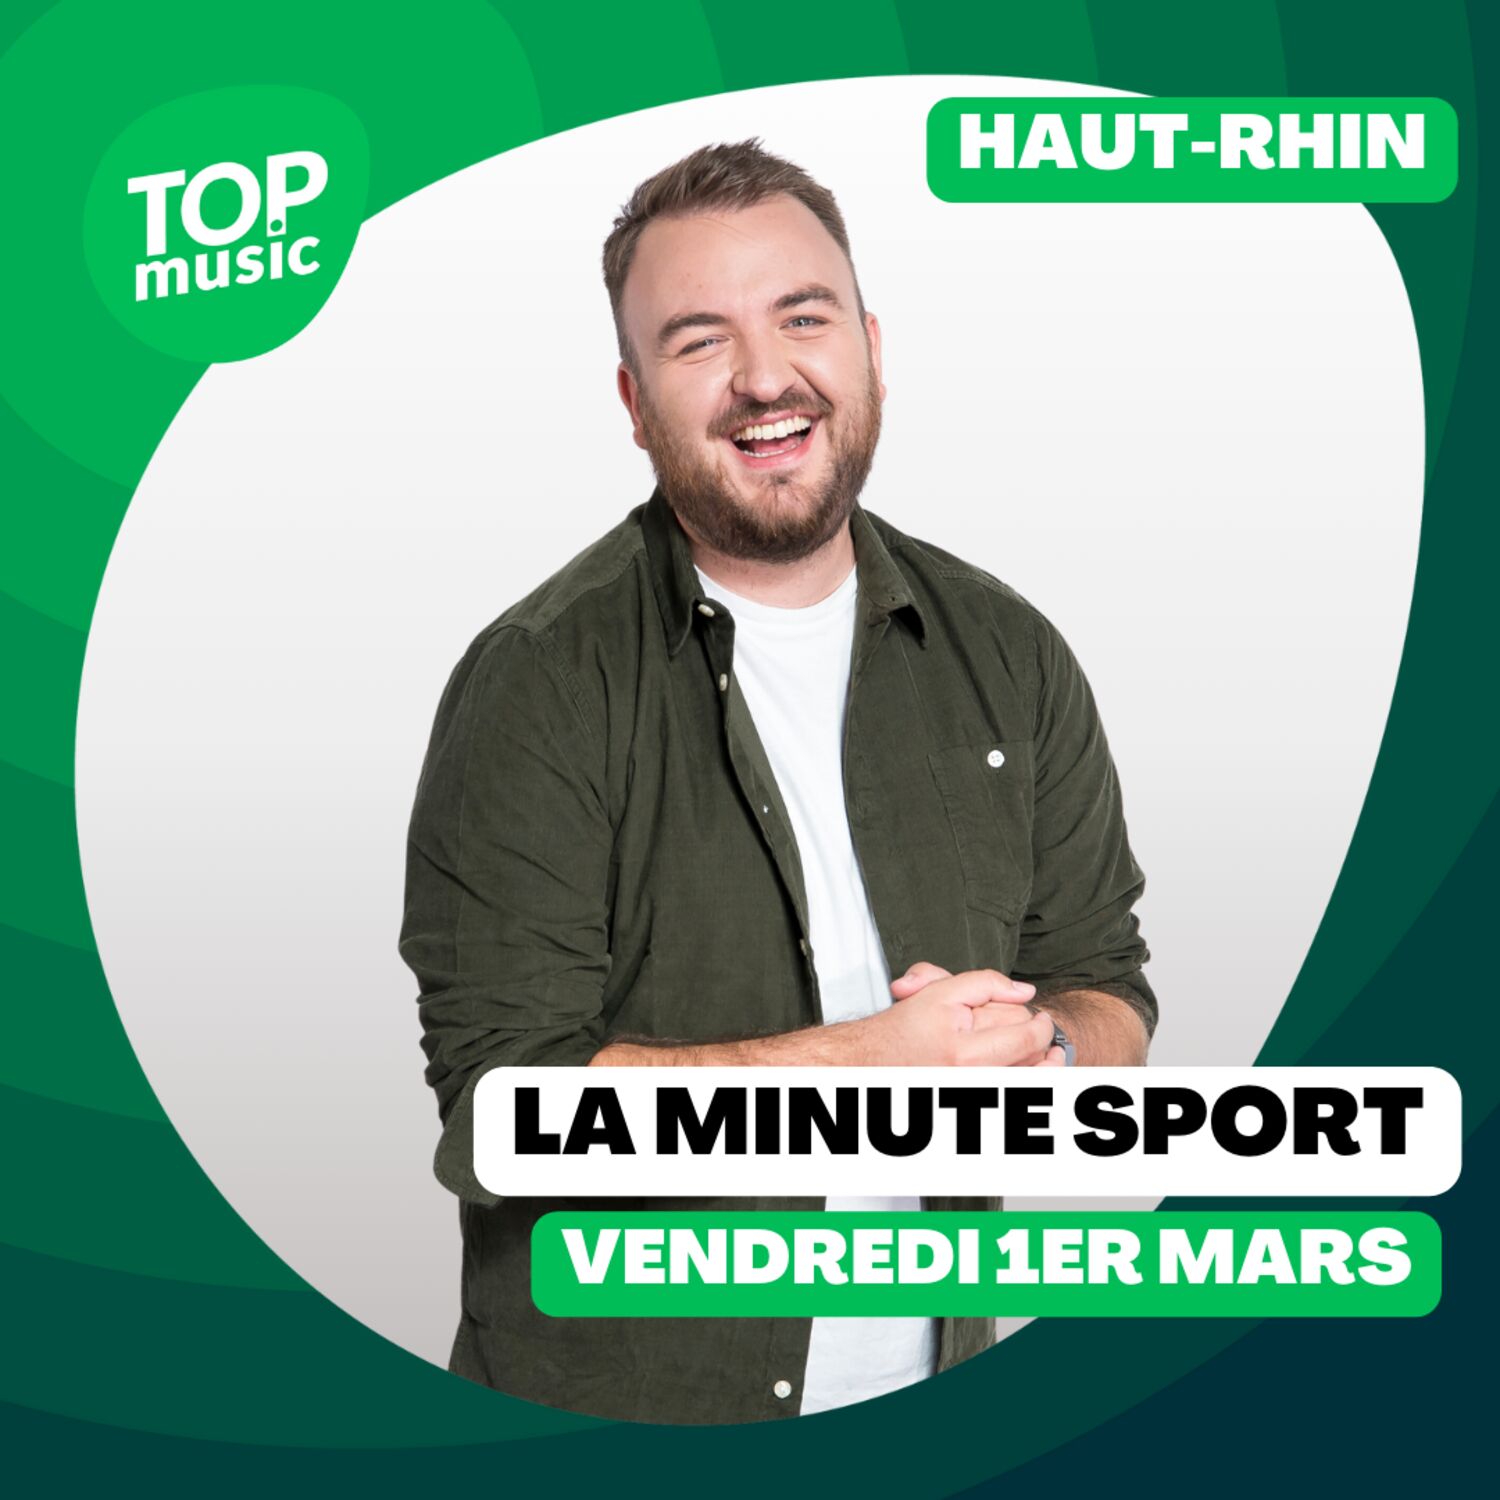 La Minute sport du Haut-Rhin - vendredi 1er mars